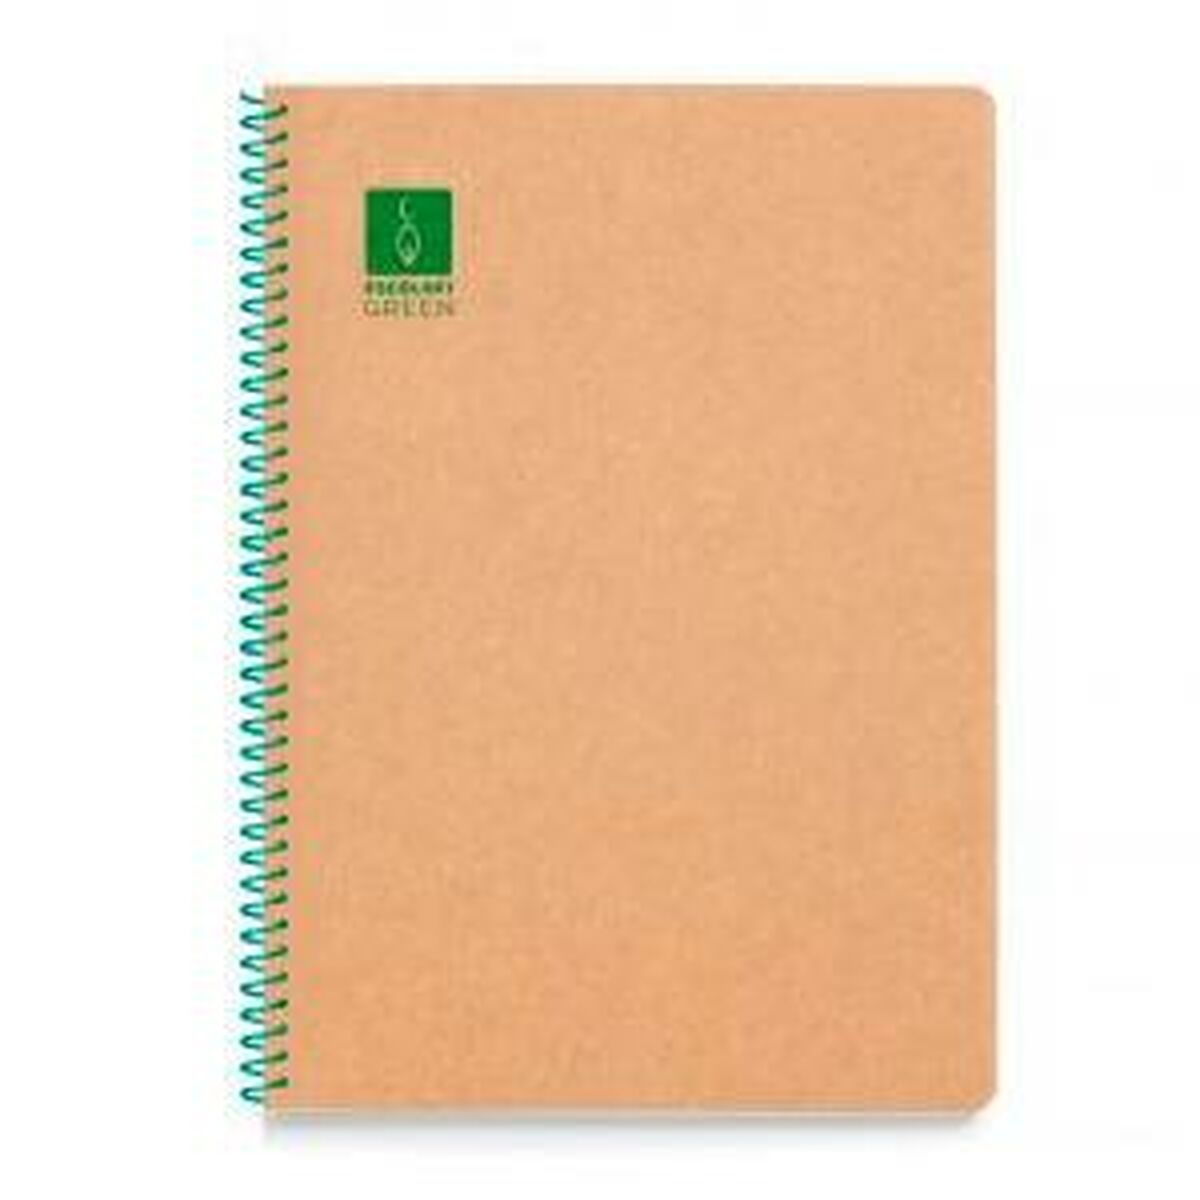 Notizbuch ESCOLOFI grün A5 50 Blatt Recycelter (5 Stück)